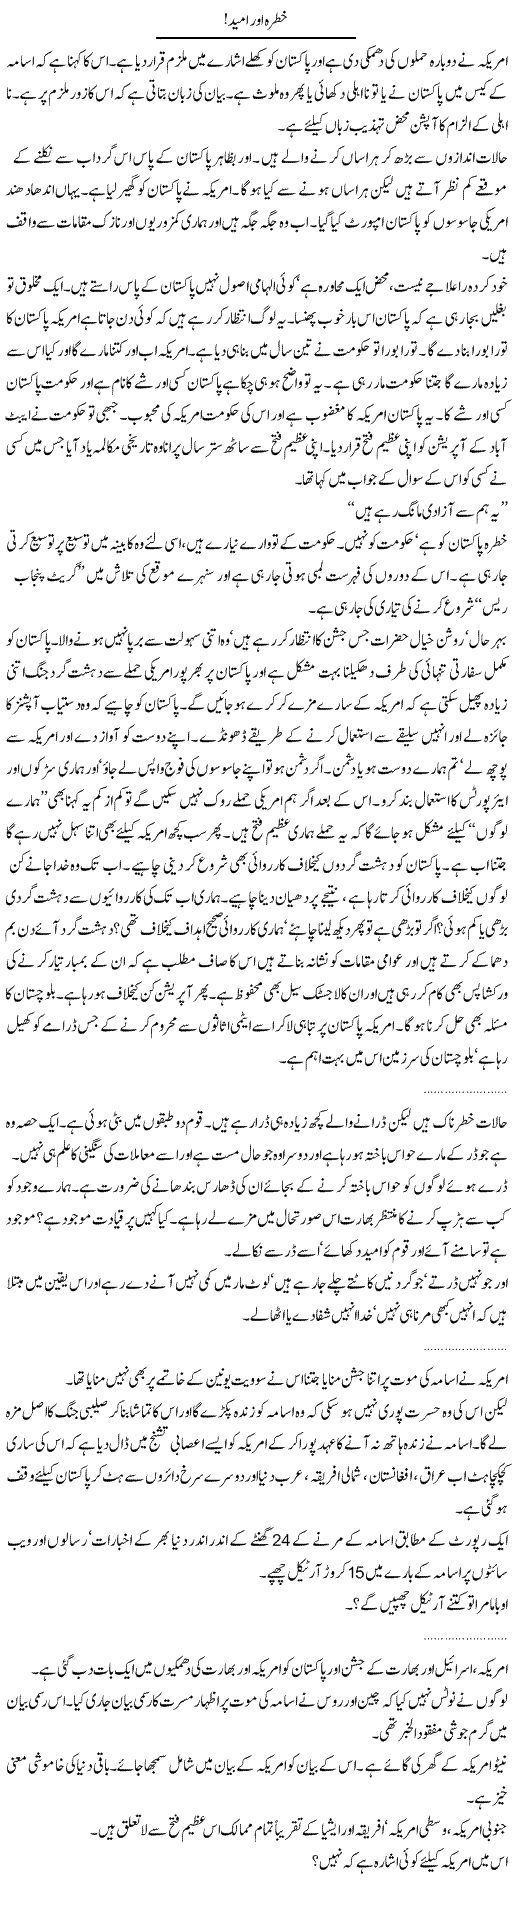 American Threat To Pakistan Express Column Abdullah Tariq 6 May 2011